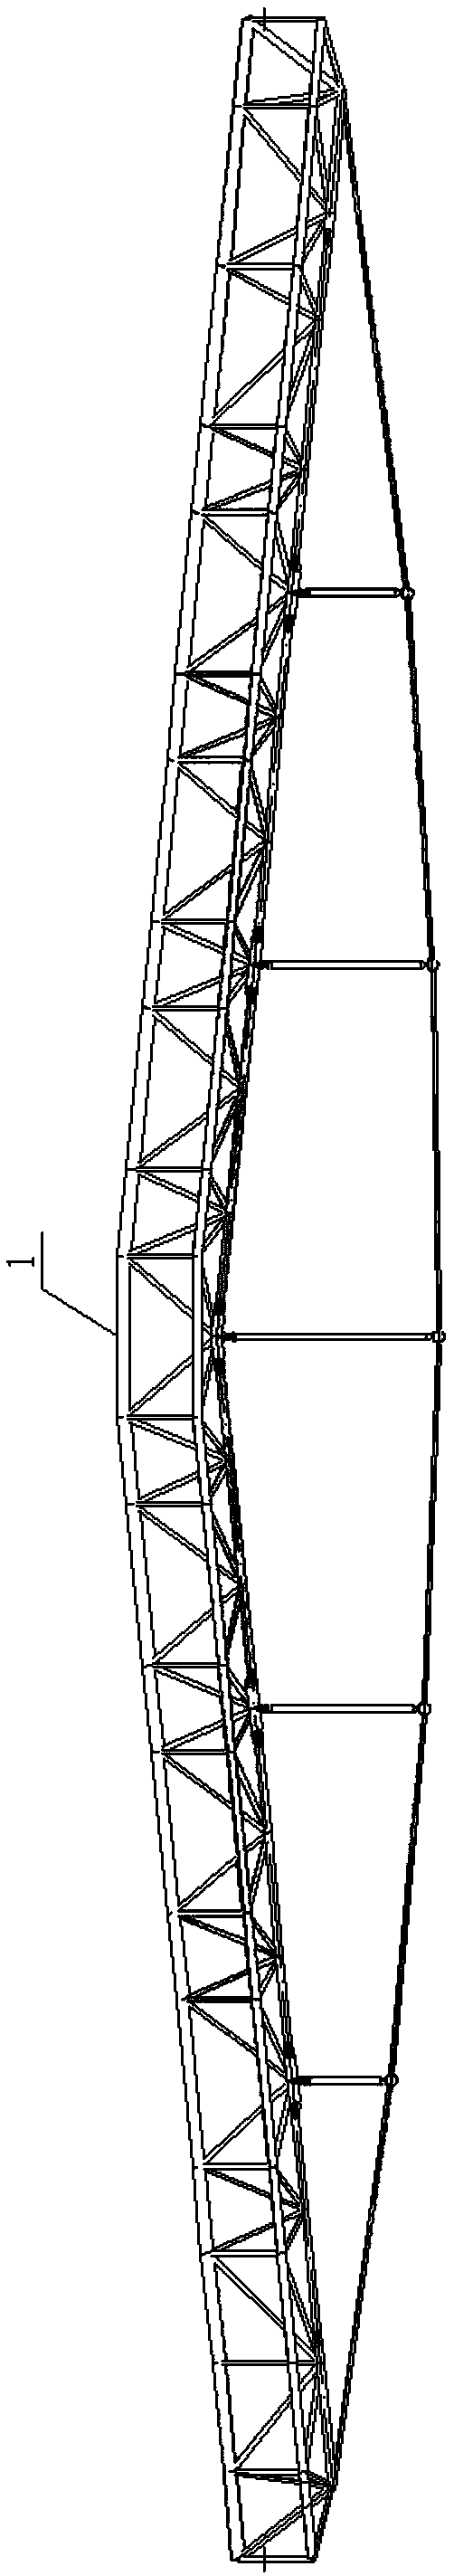 Long-span beam string truss beam off-site construction method